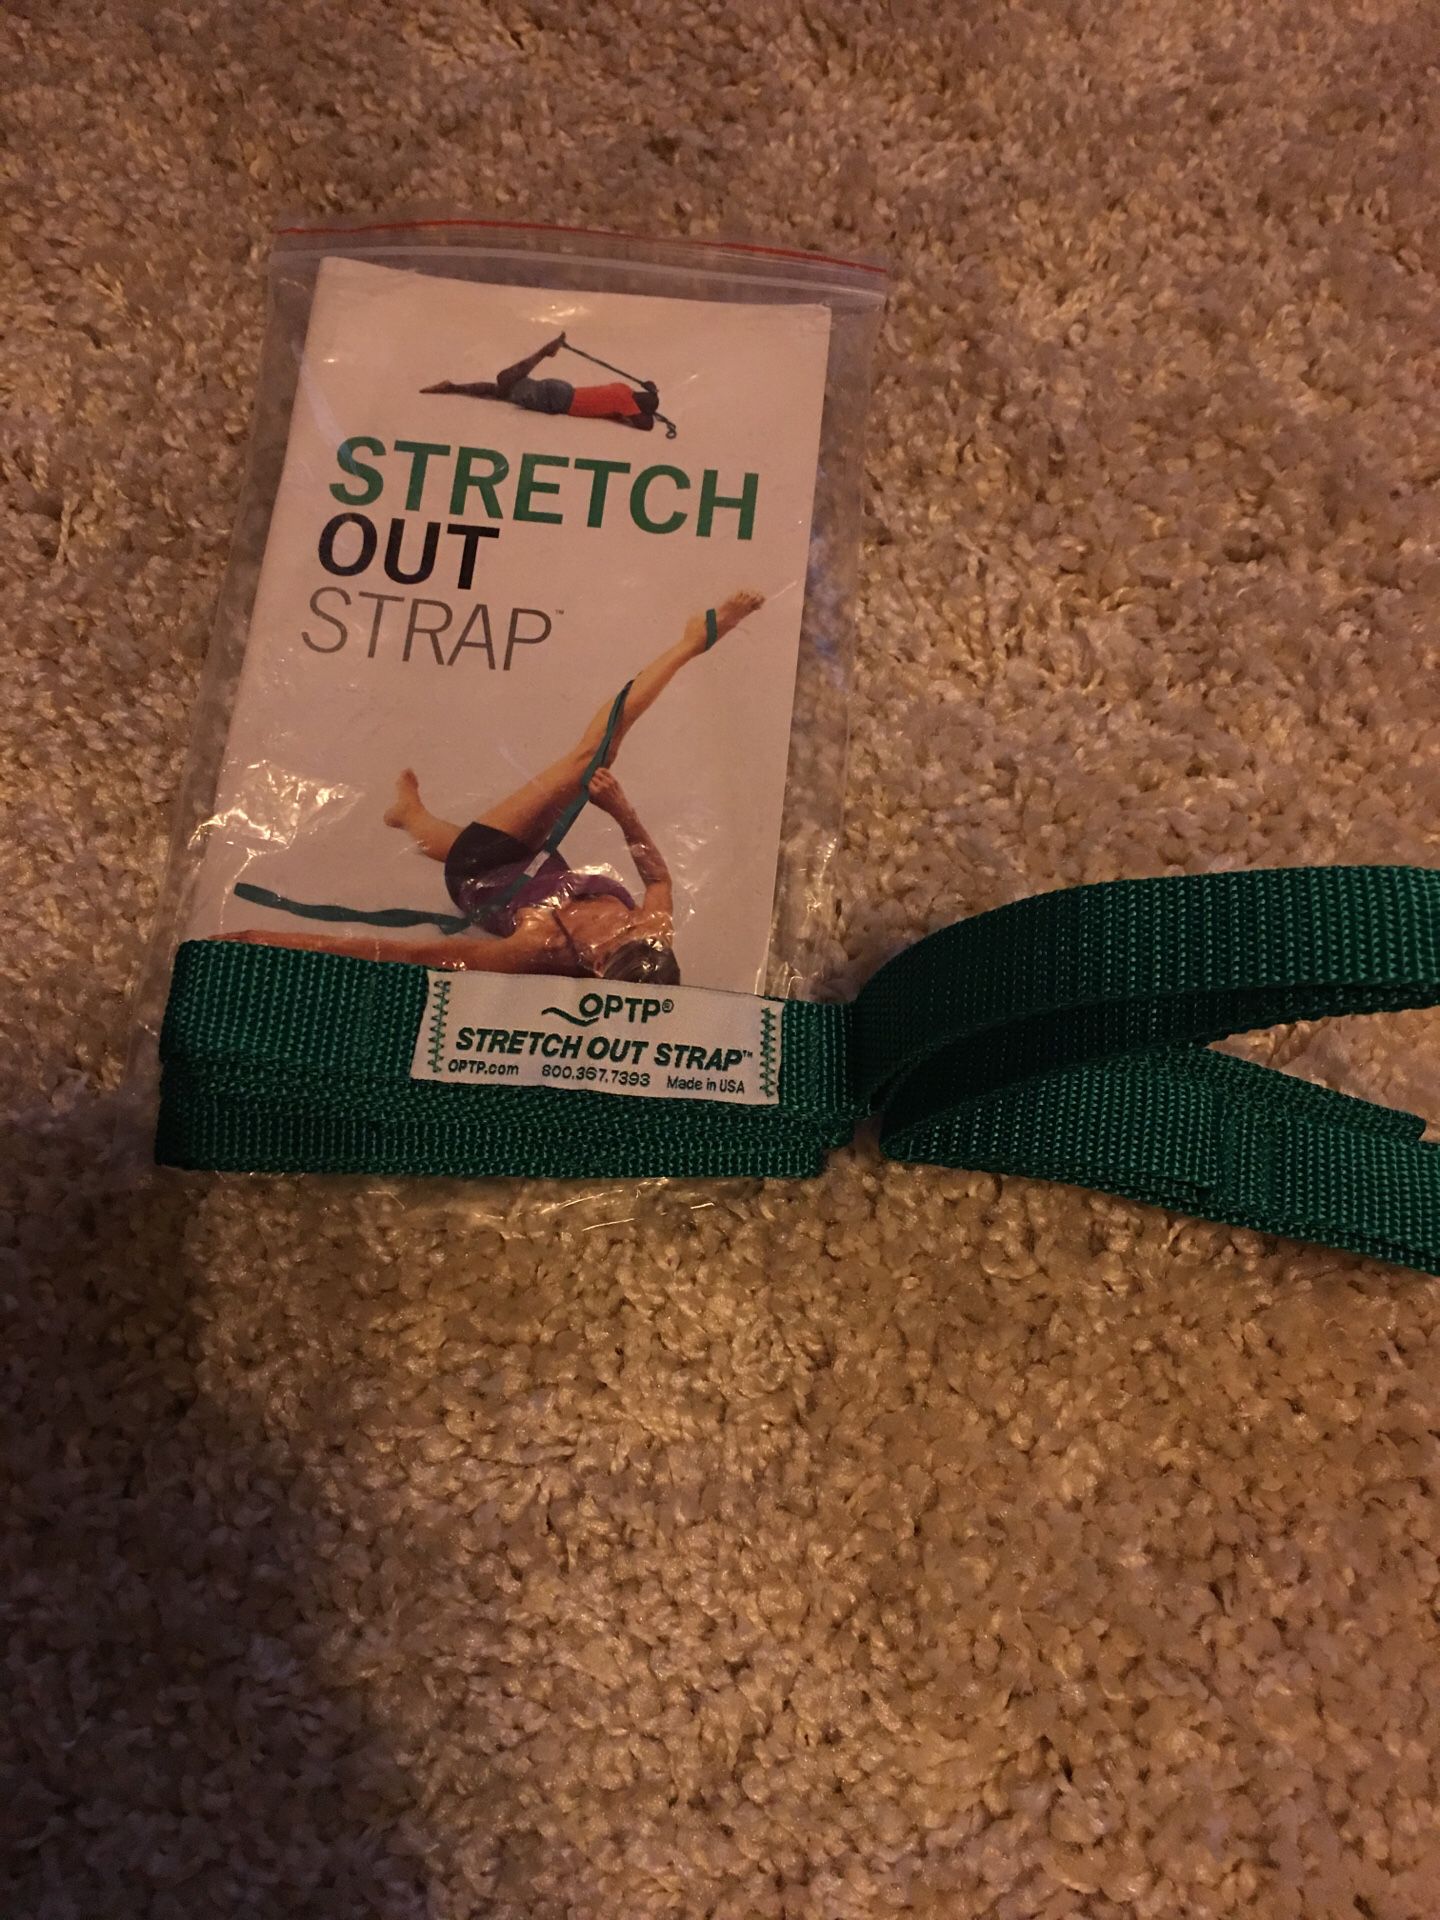 The original Stretch out strap.